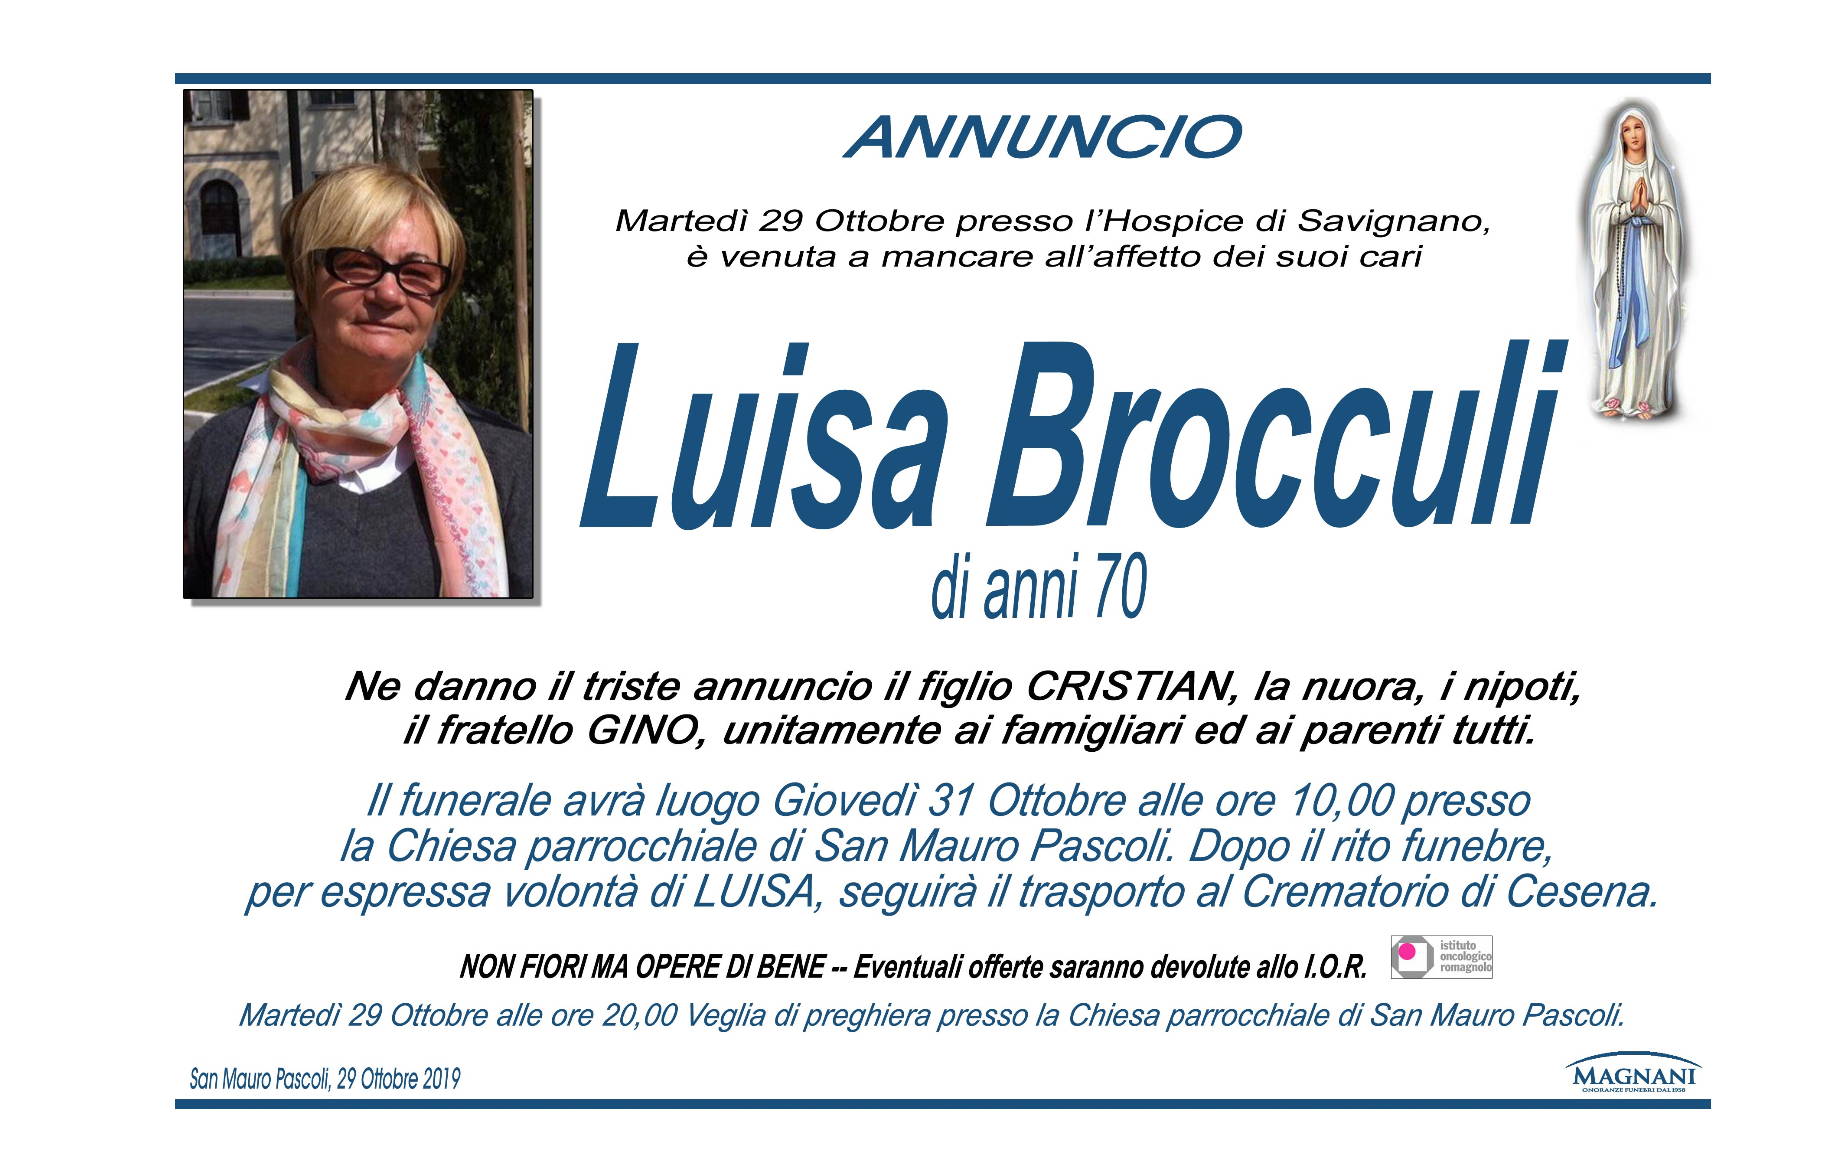 Luisa Brocculi